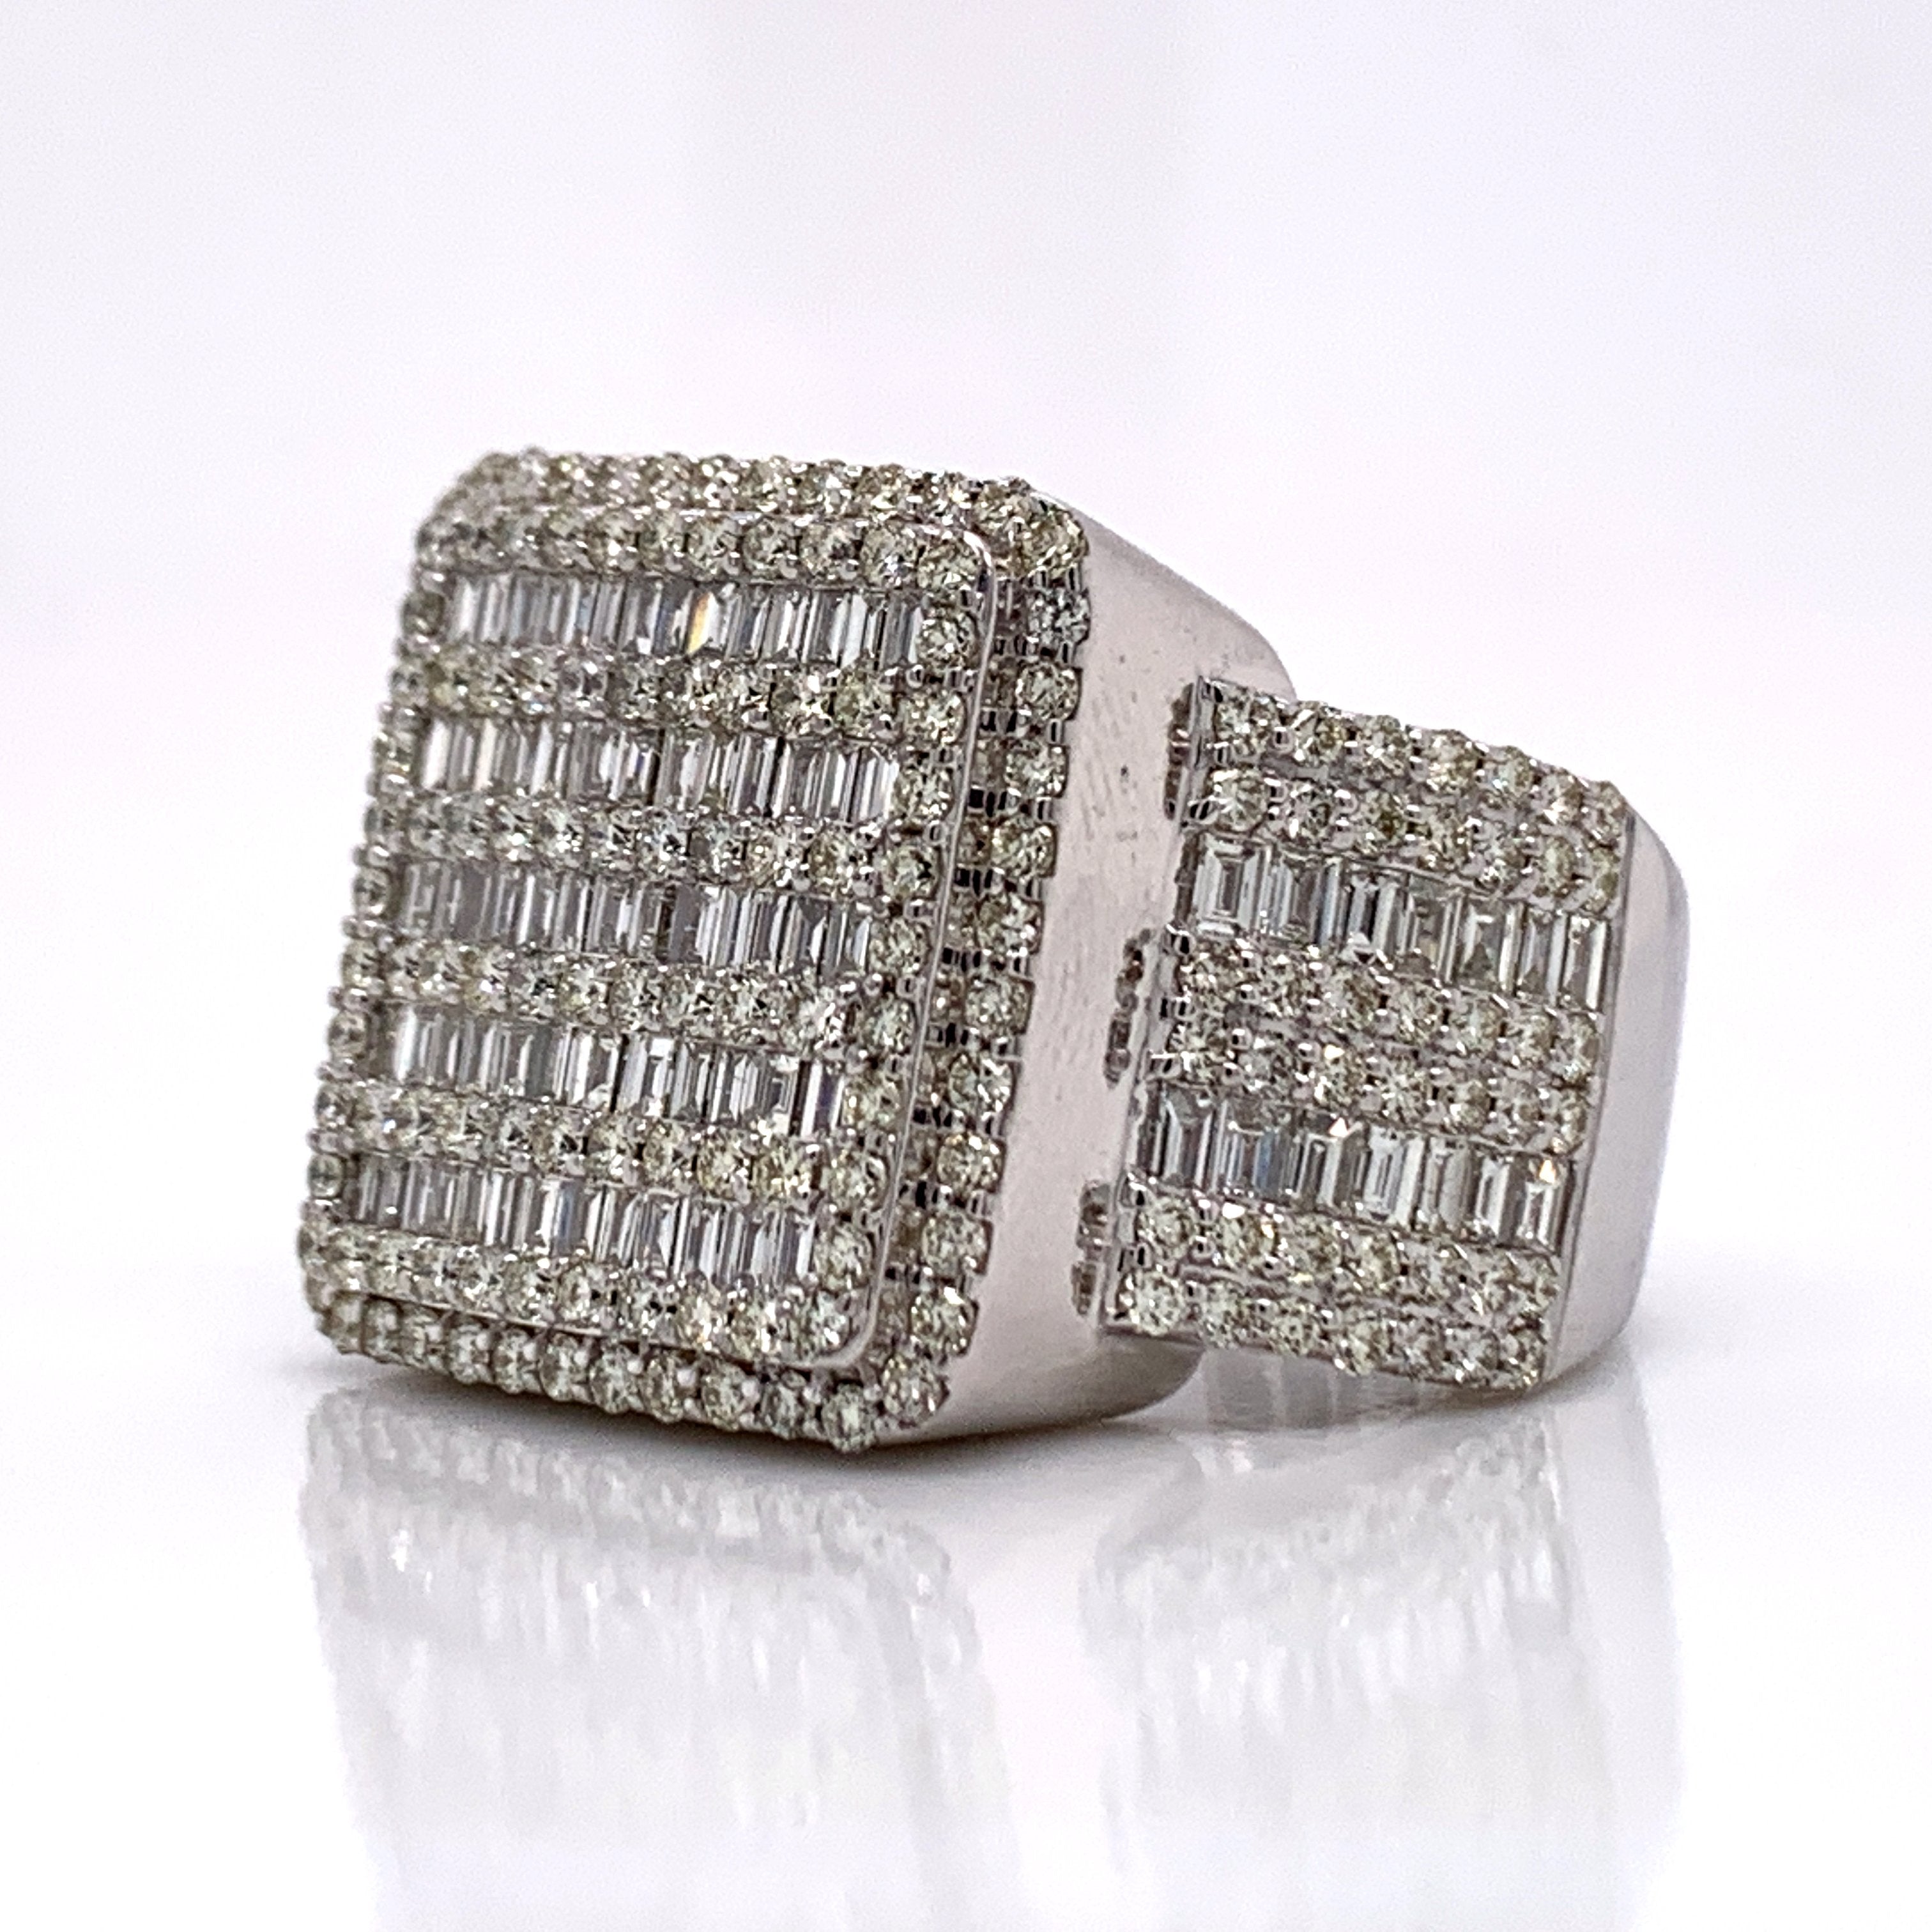 3.50 CT. Diamond Ring in 14K White Gold - White Carat Diamonds 